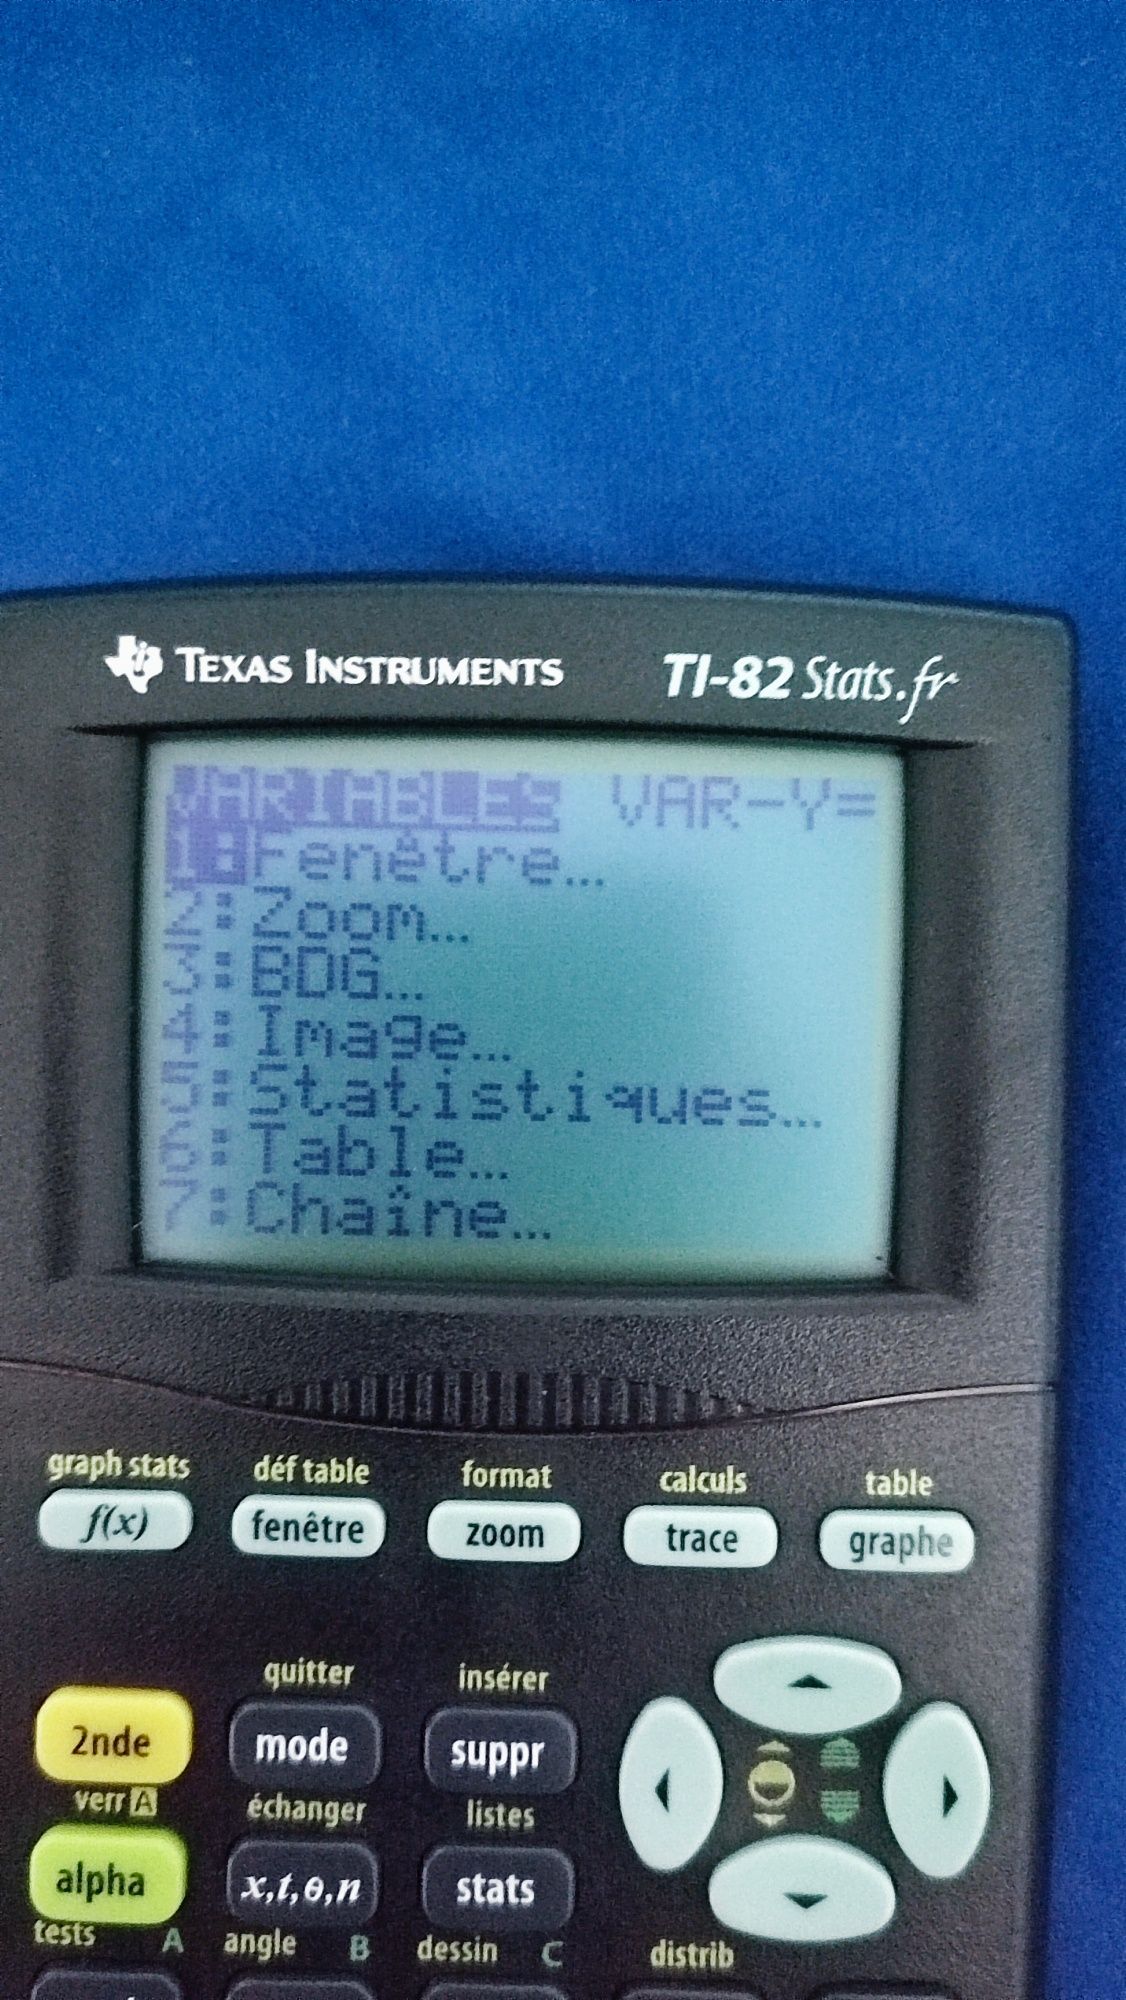 TEXAS INSTRUMENTS TI-82 Stats fr calculator științific.